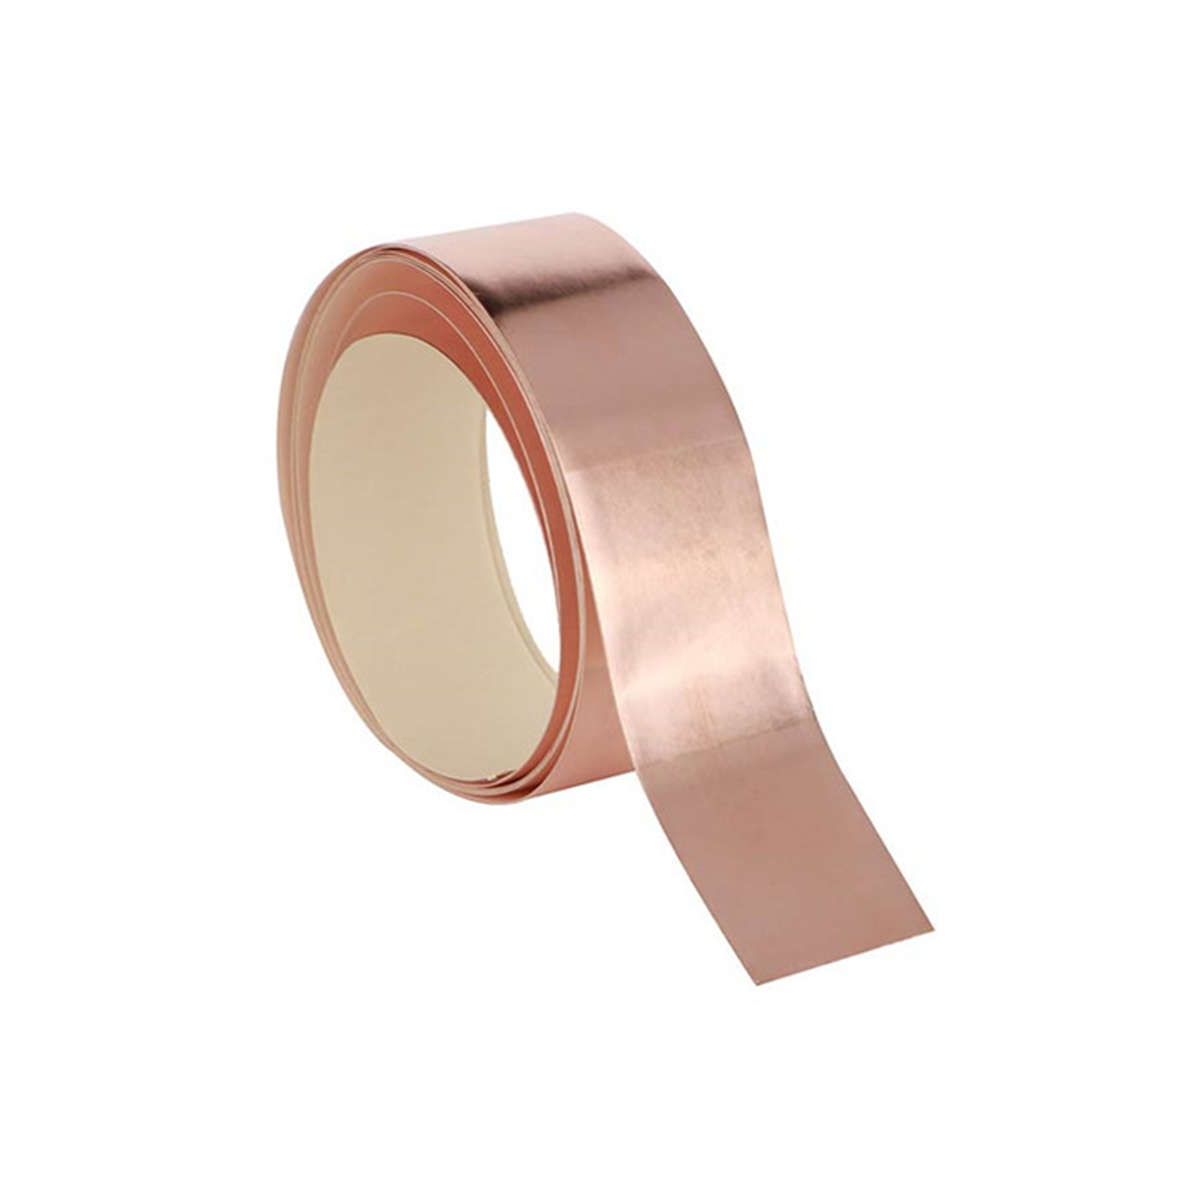 BOSTON CST-100X5 copper shielding tape